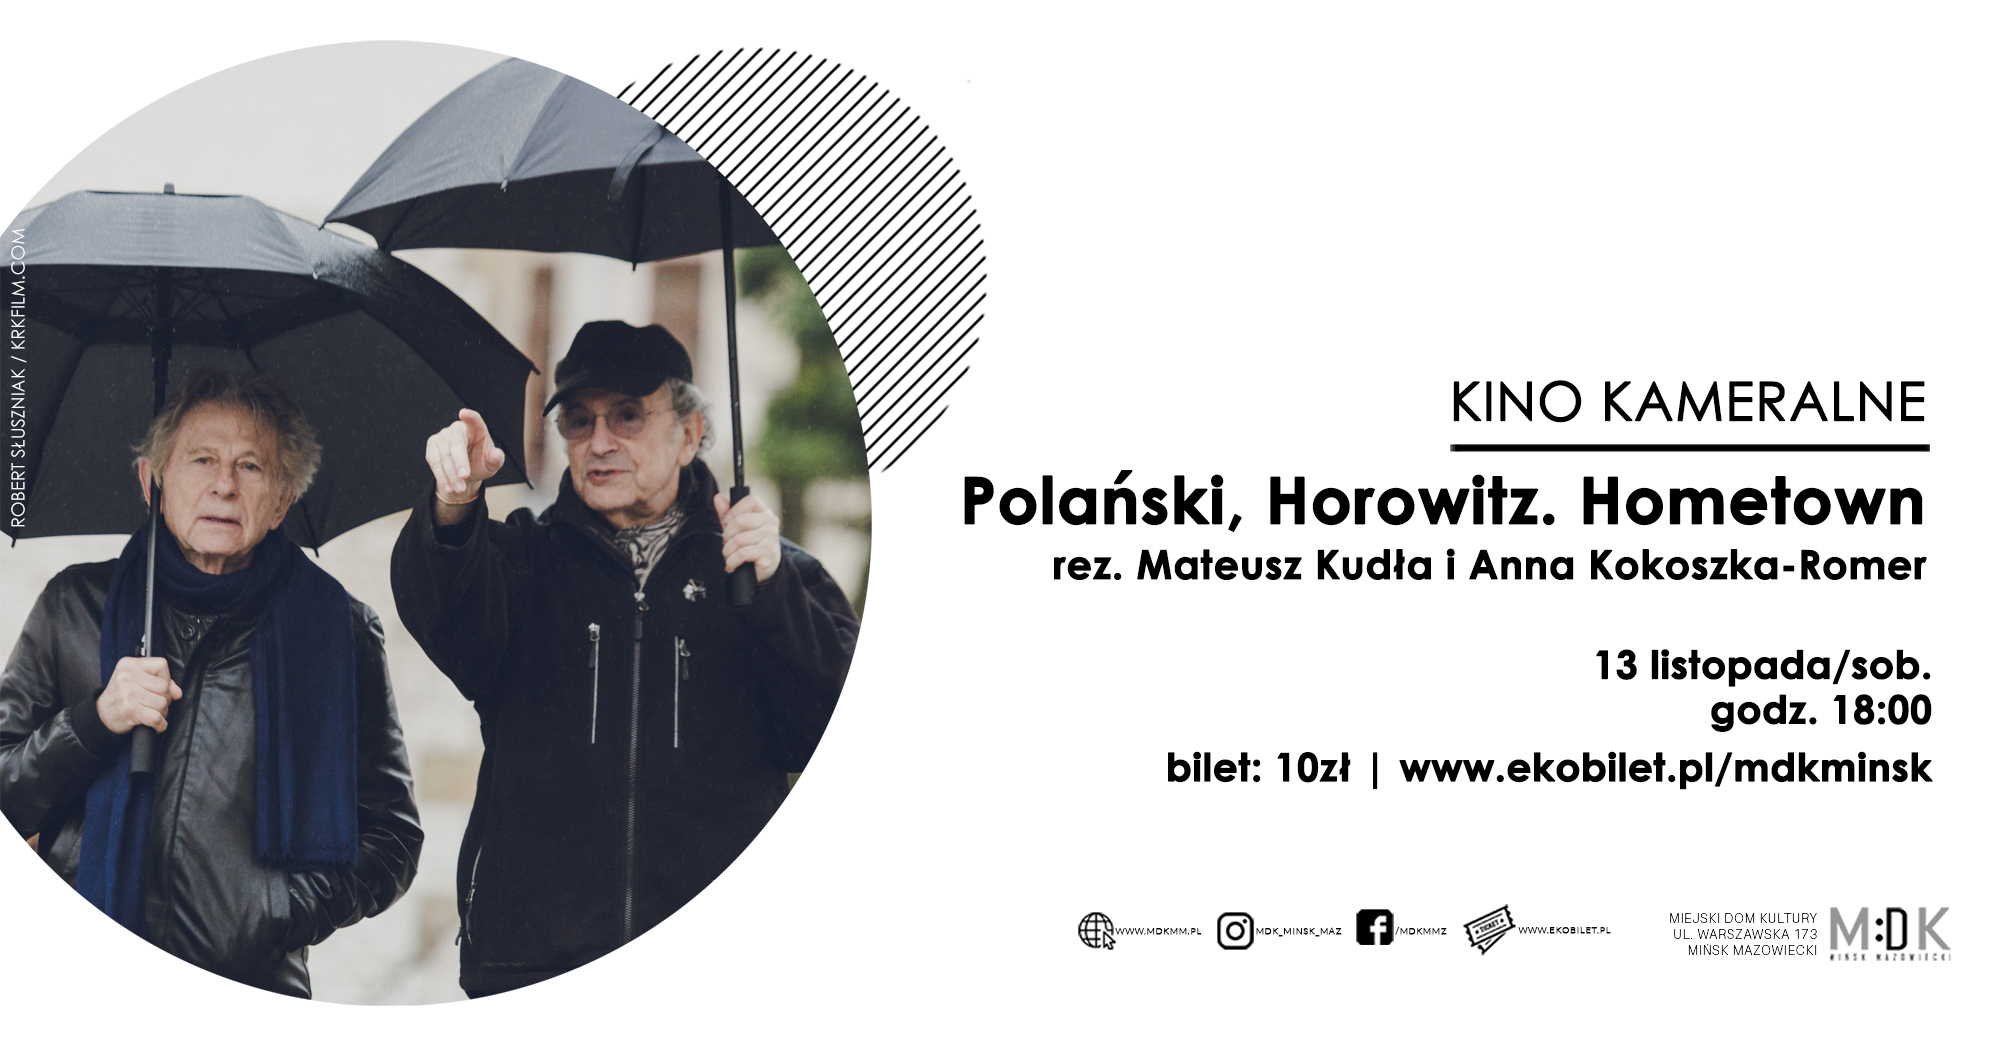 Polański, Hortwitz. Hometown | kino kameralne